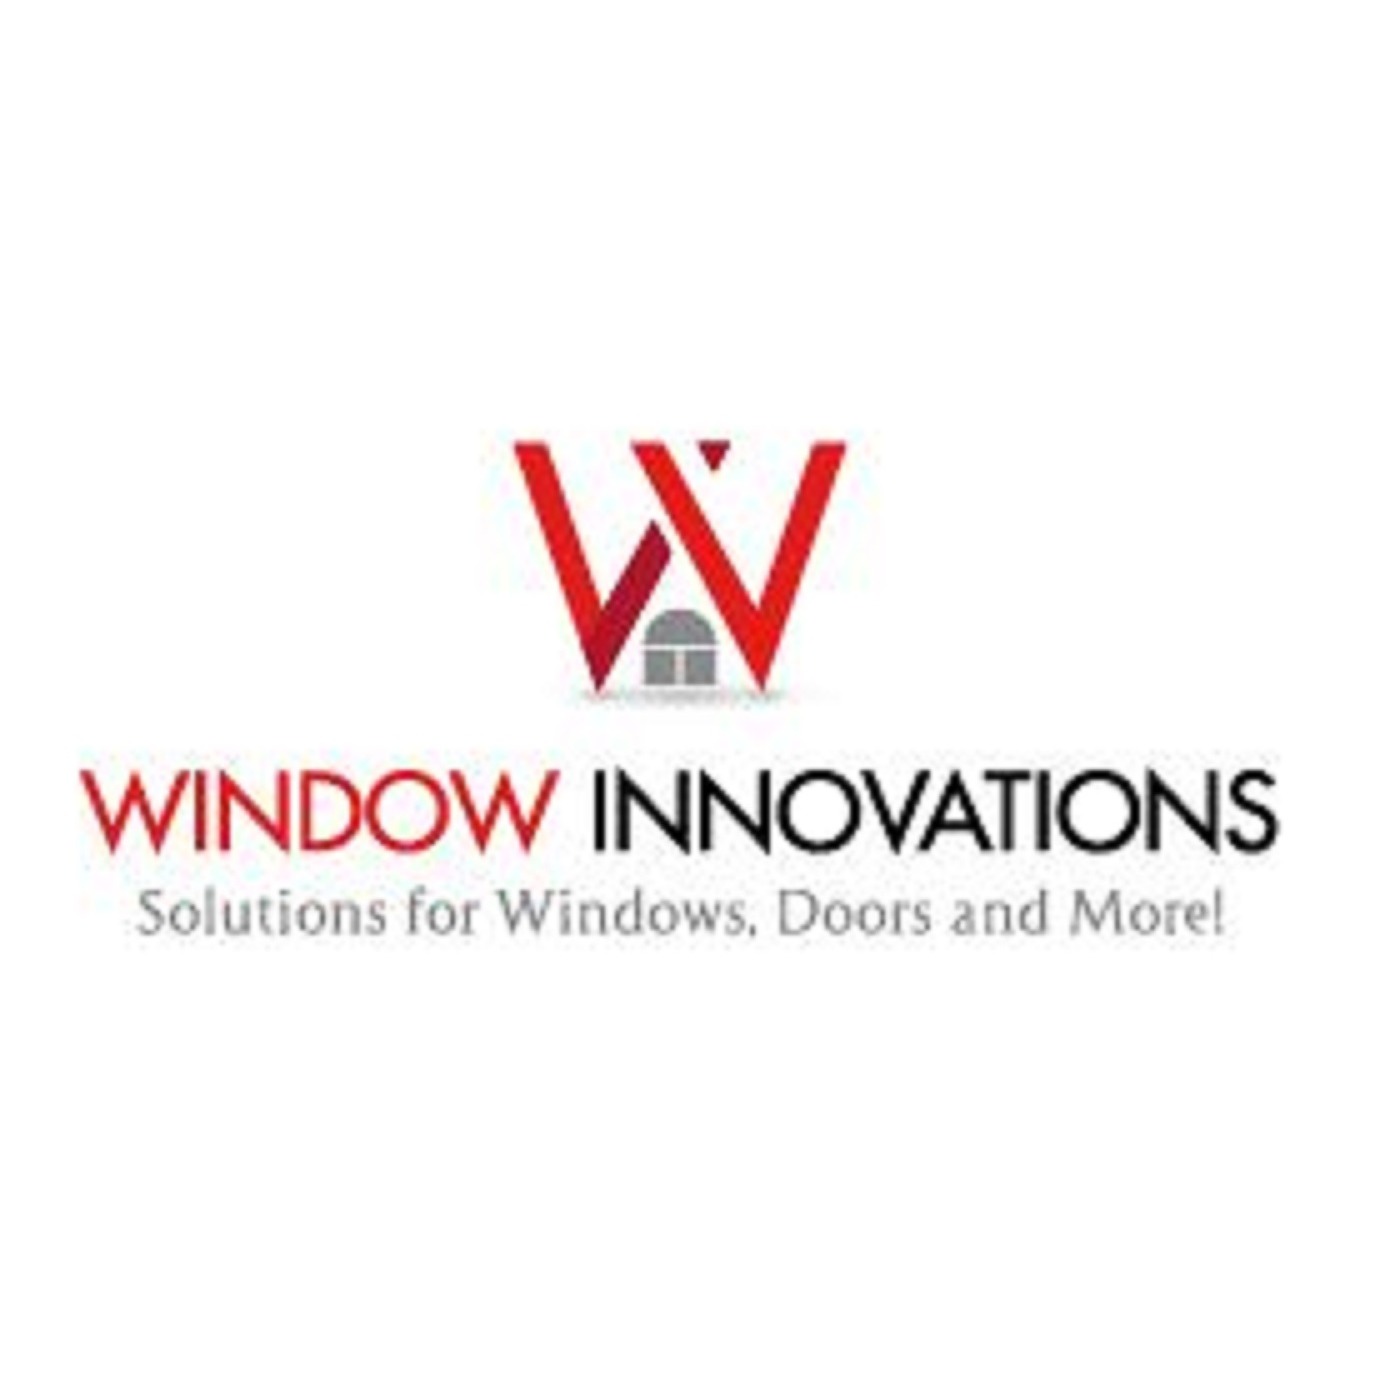 Window Innovations Logo